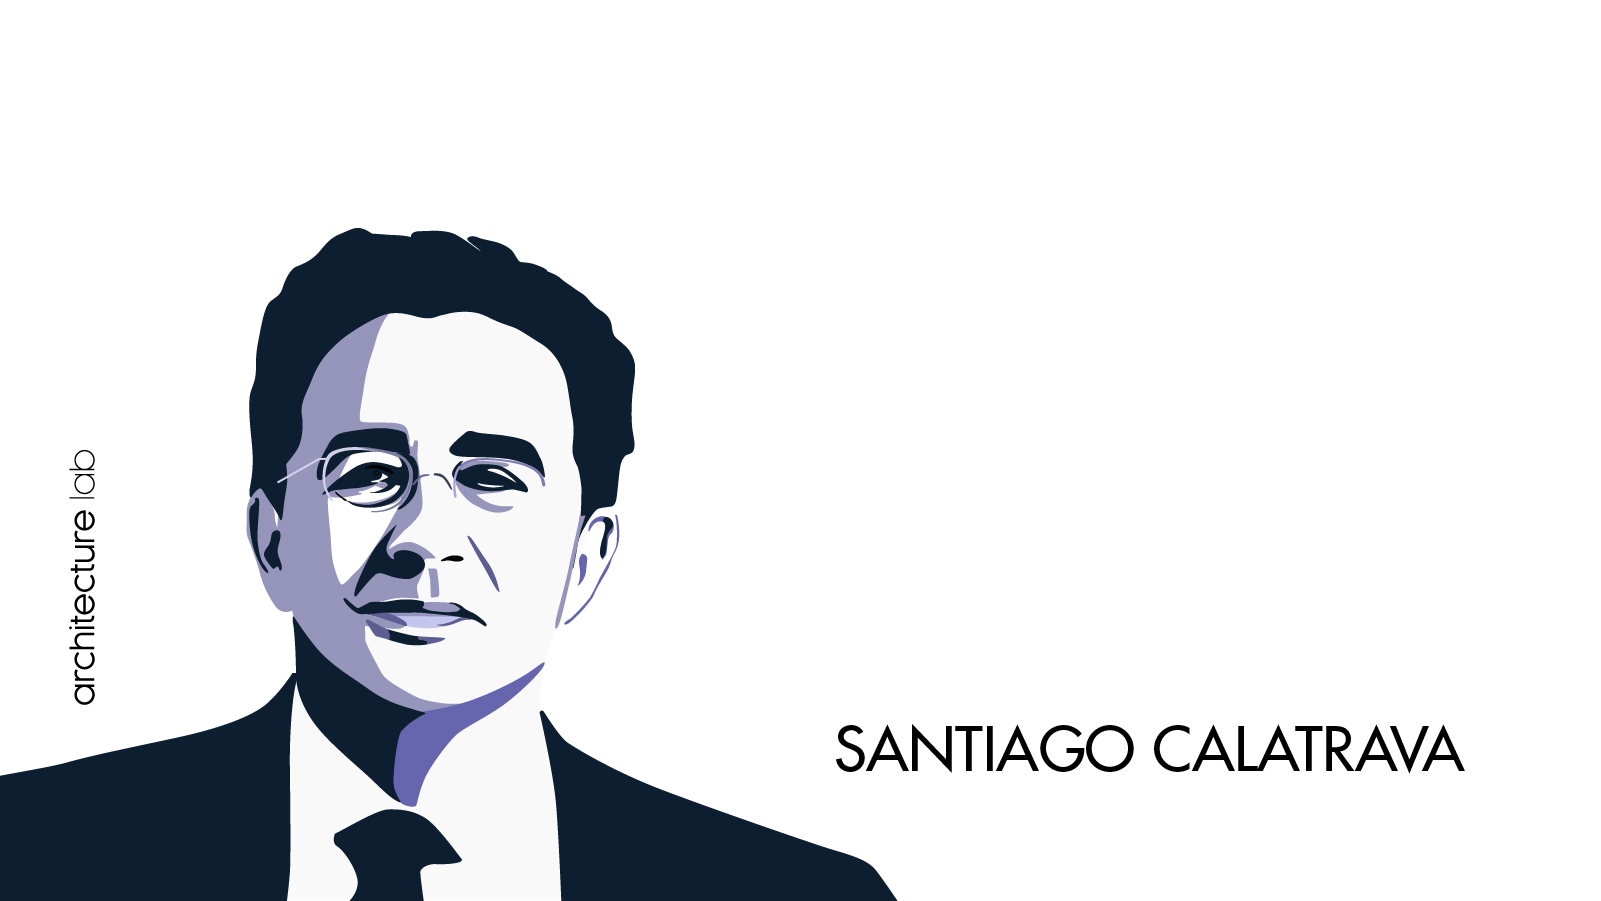 2. Santiago calatrava